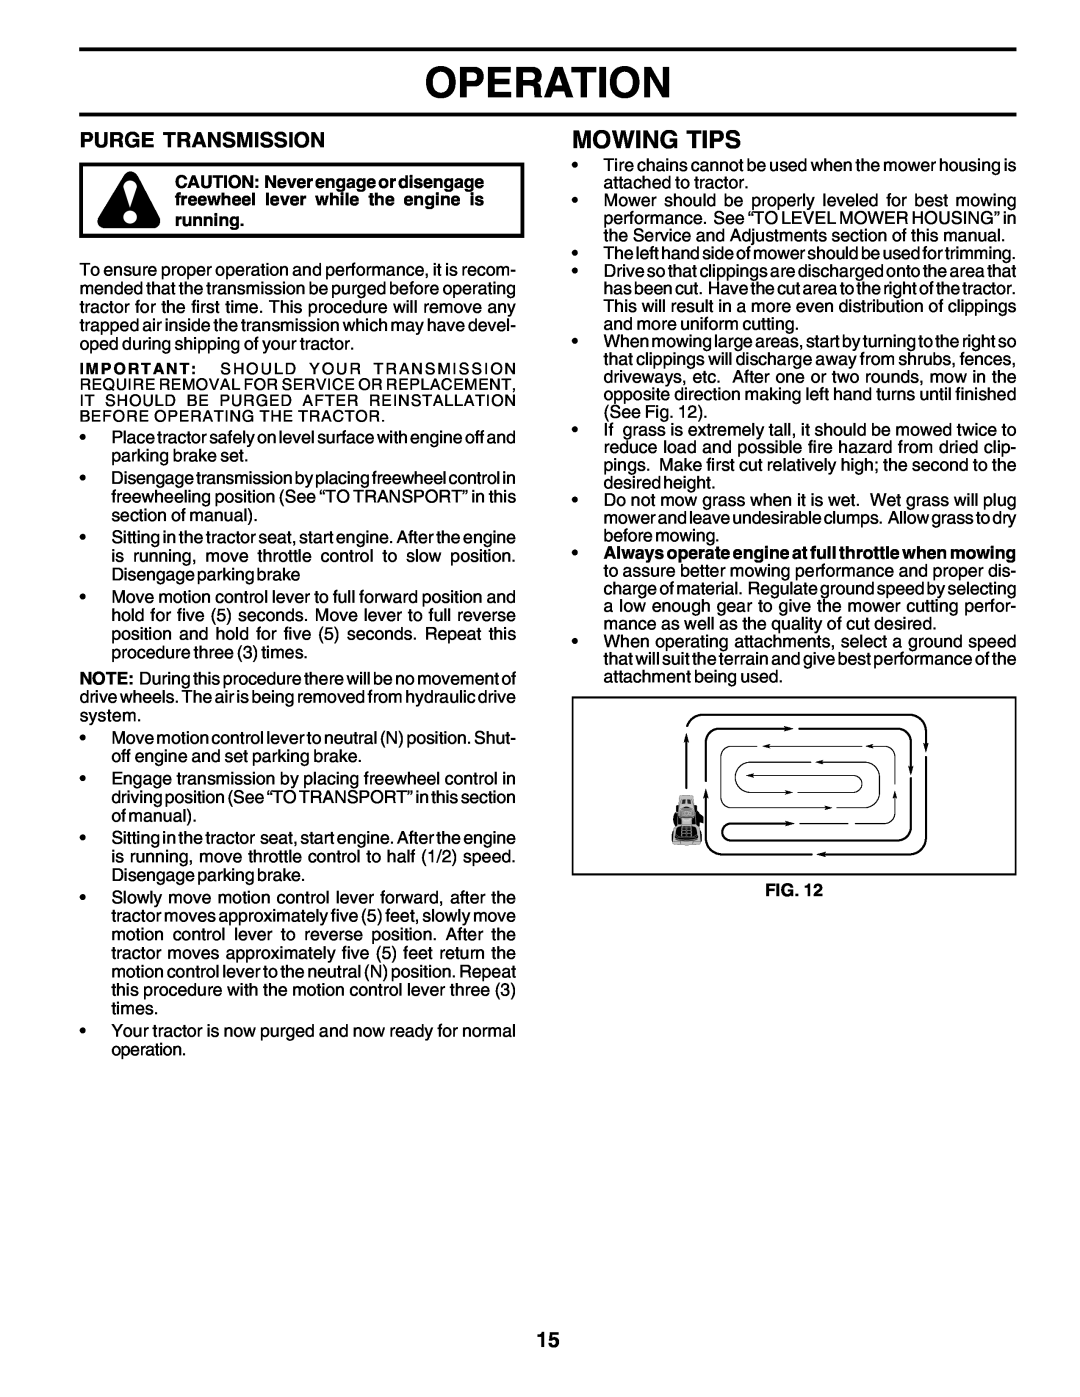 Poulan PRGT22H50D owner manual Mowing Tips, Operation, Purge Transmission 